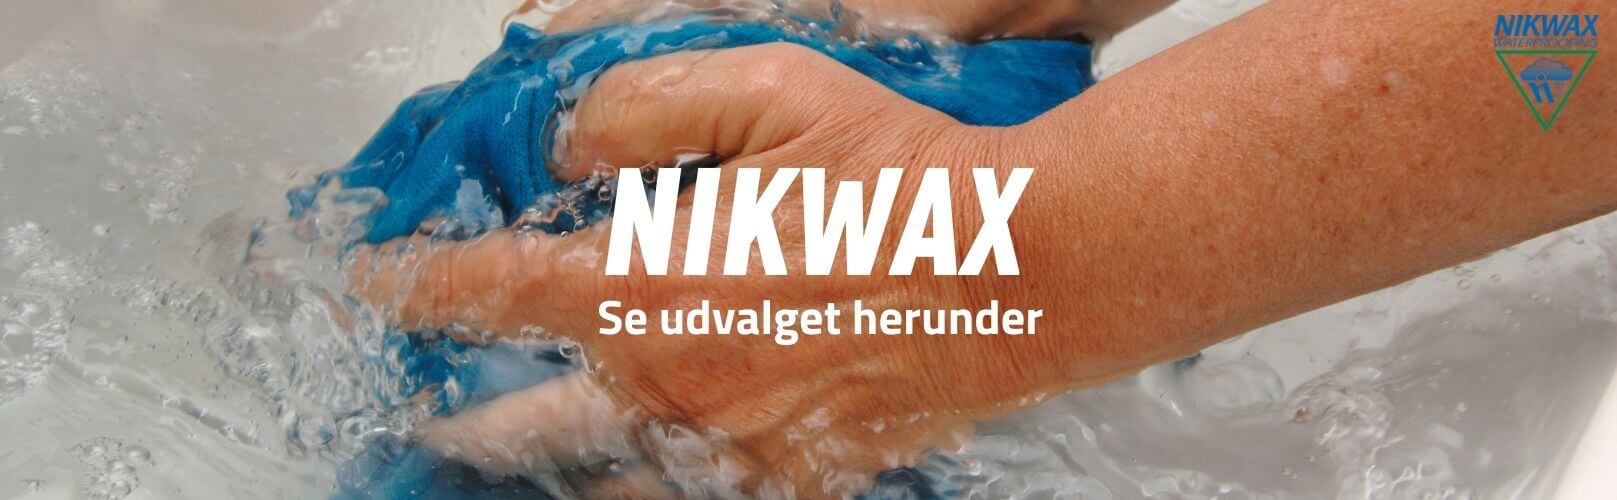 Nikwax brand banner